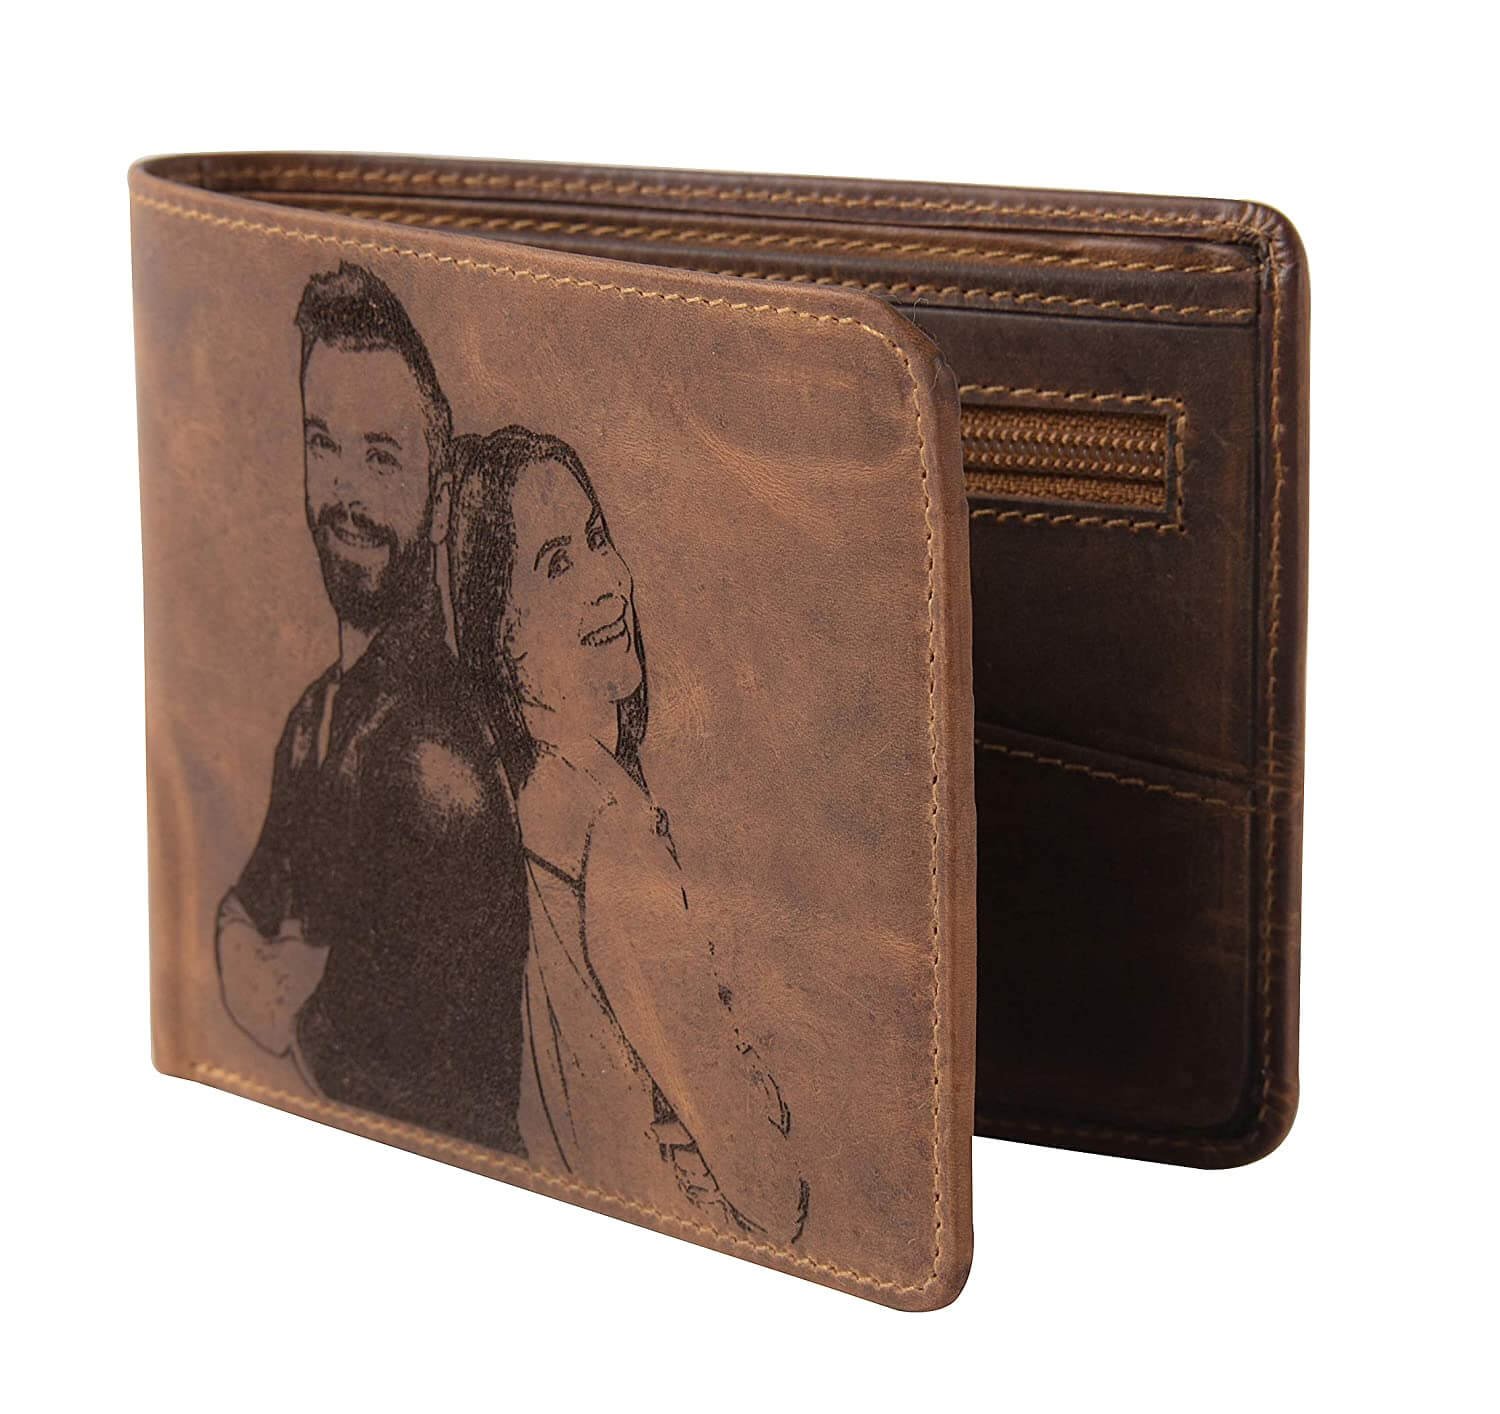 Karmanah Light Brown Leather Wallet